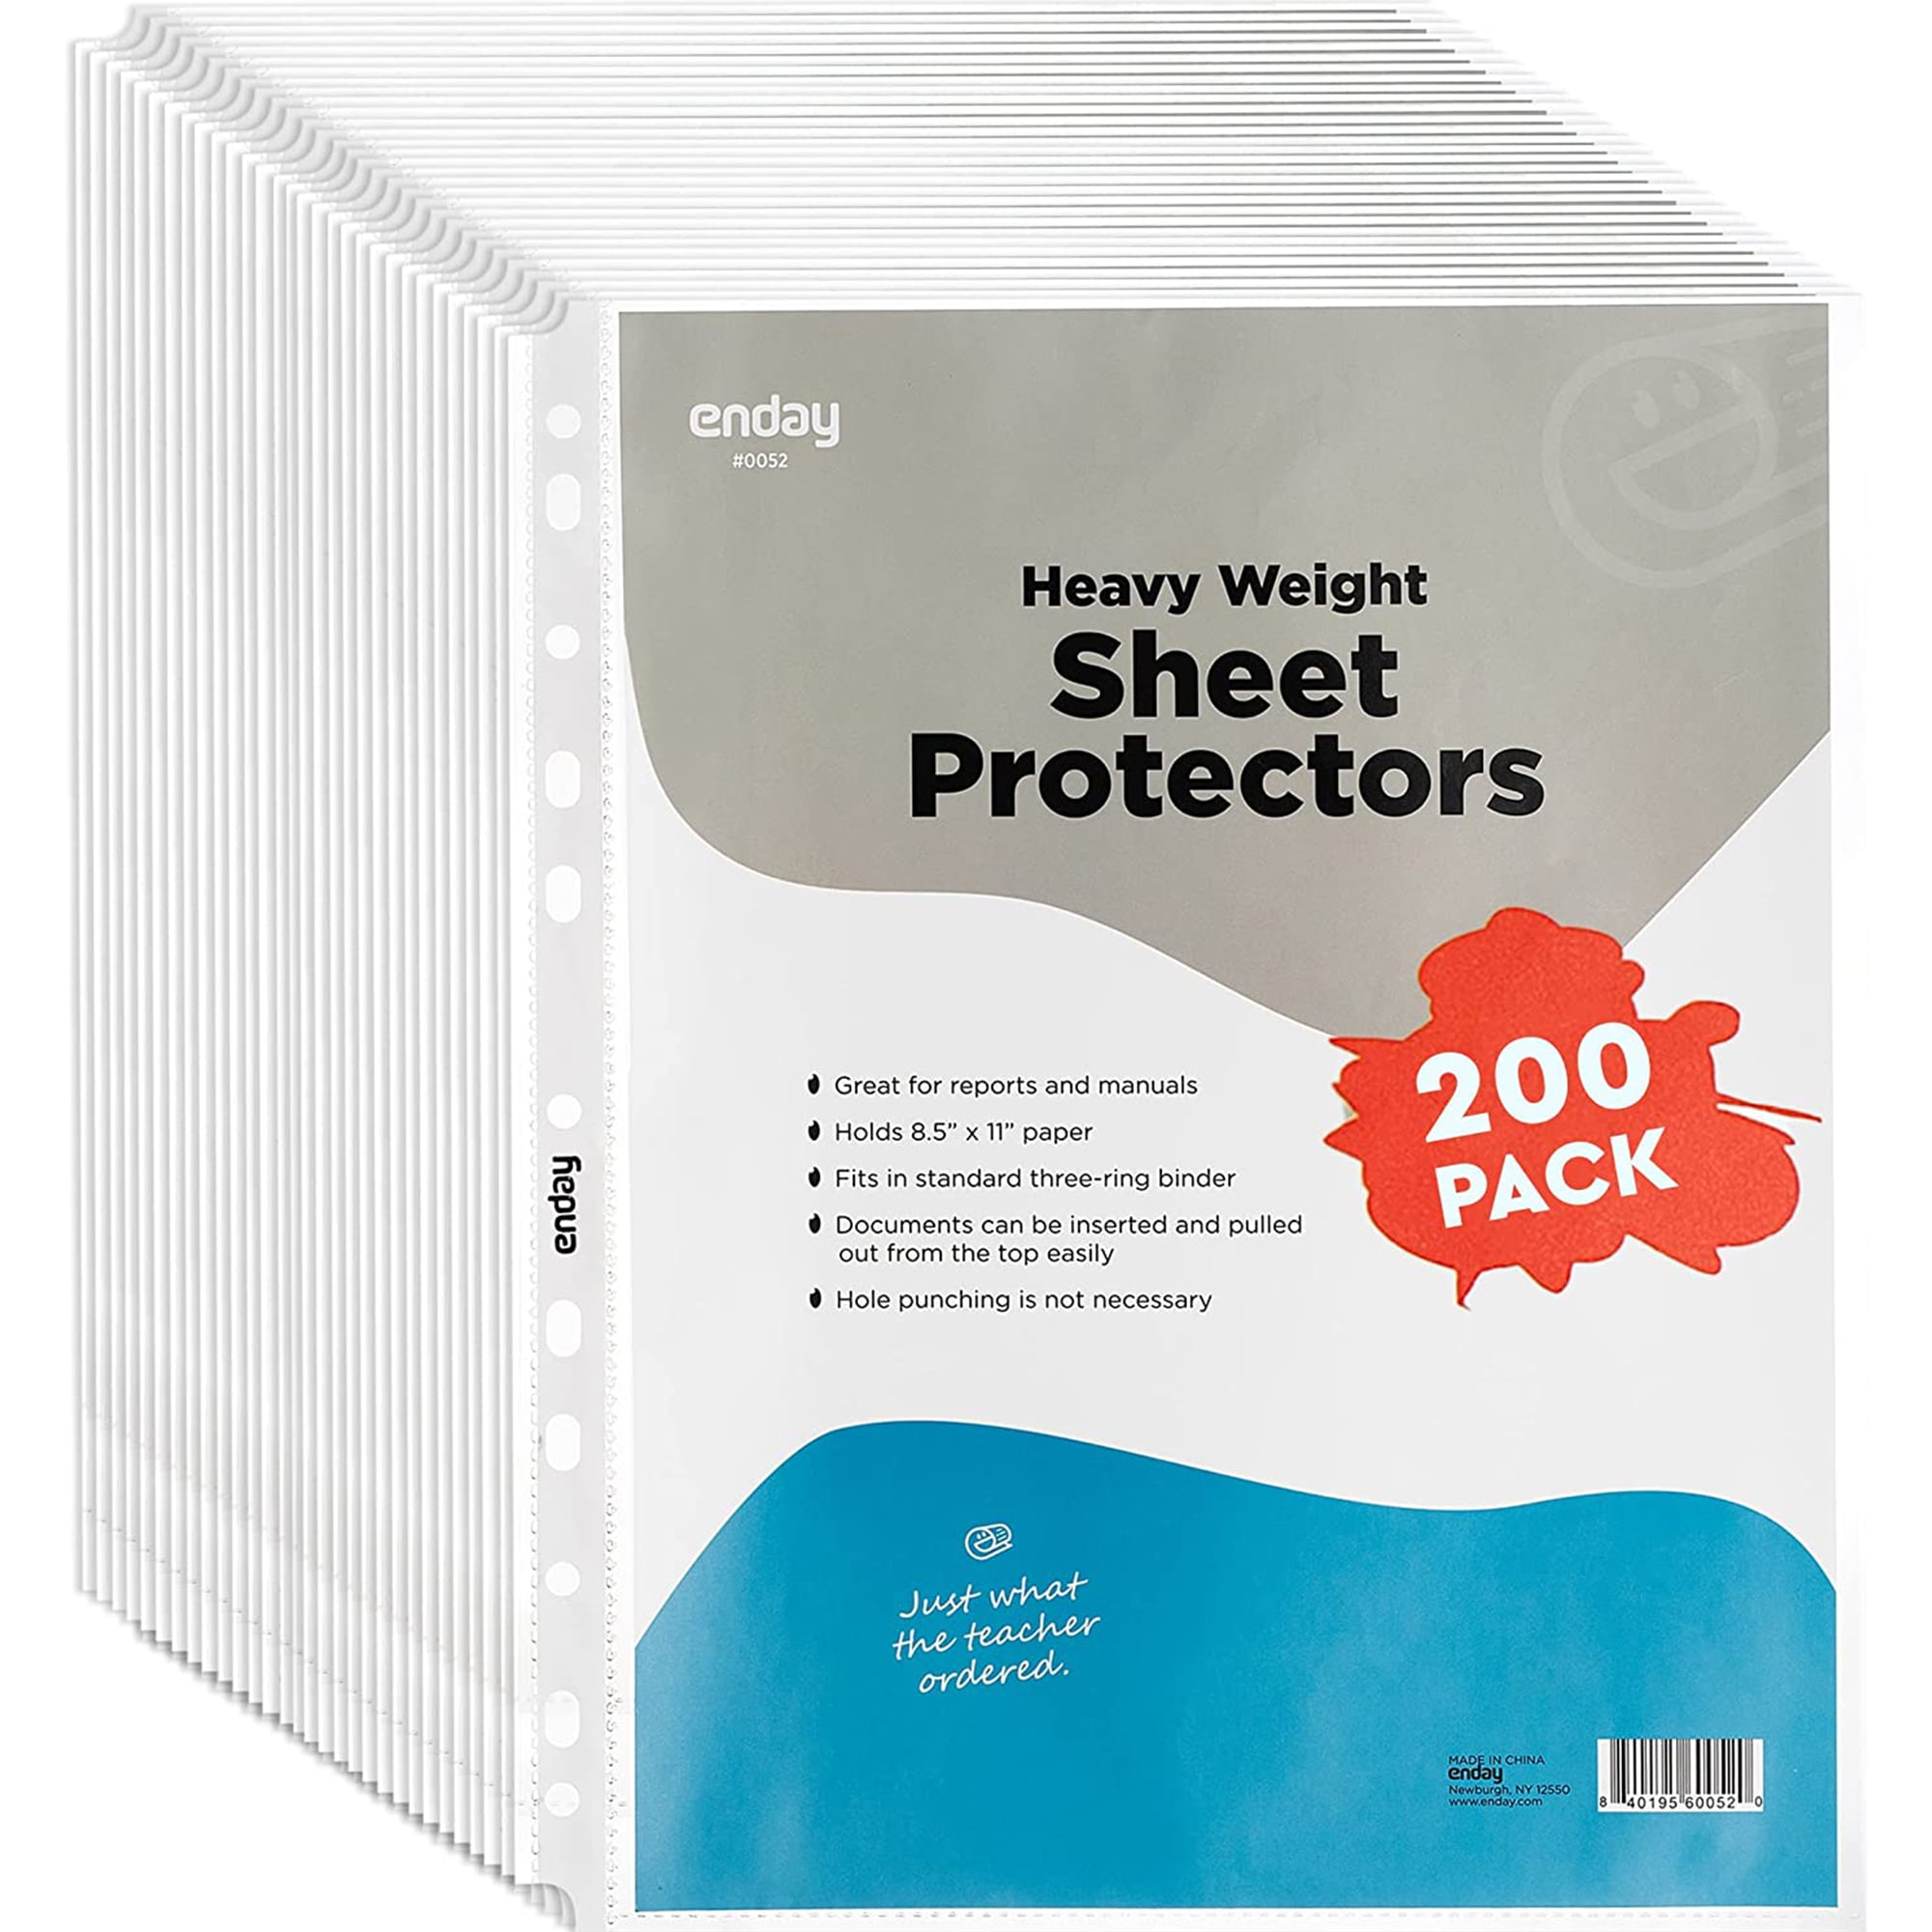 Sheet Protectors, Ledger Size, 50 Pack - Bindertek